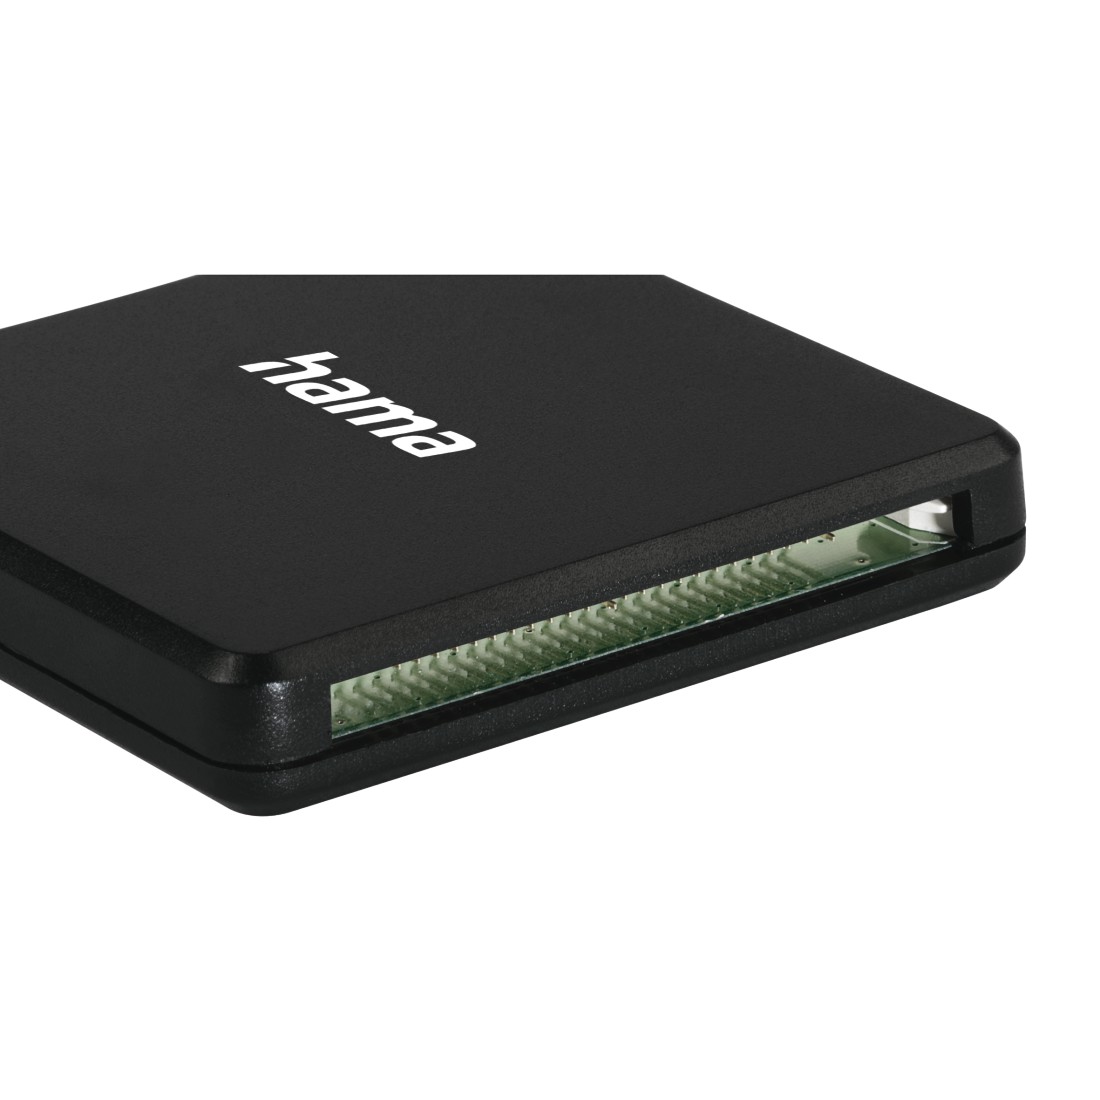 Hama 00124022 USB 3.0 Multi-Card Reader, SD/microSD/CF, black